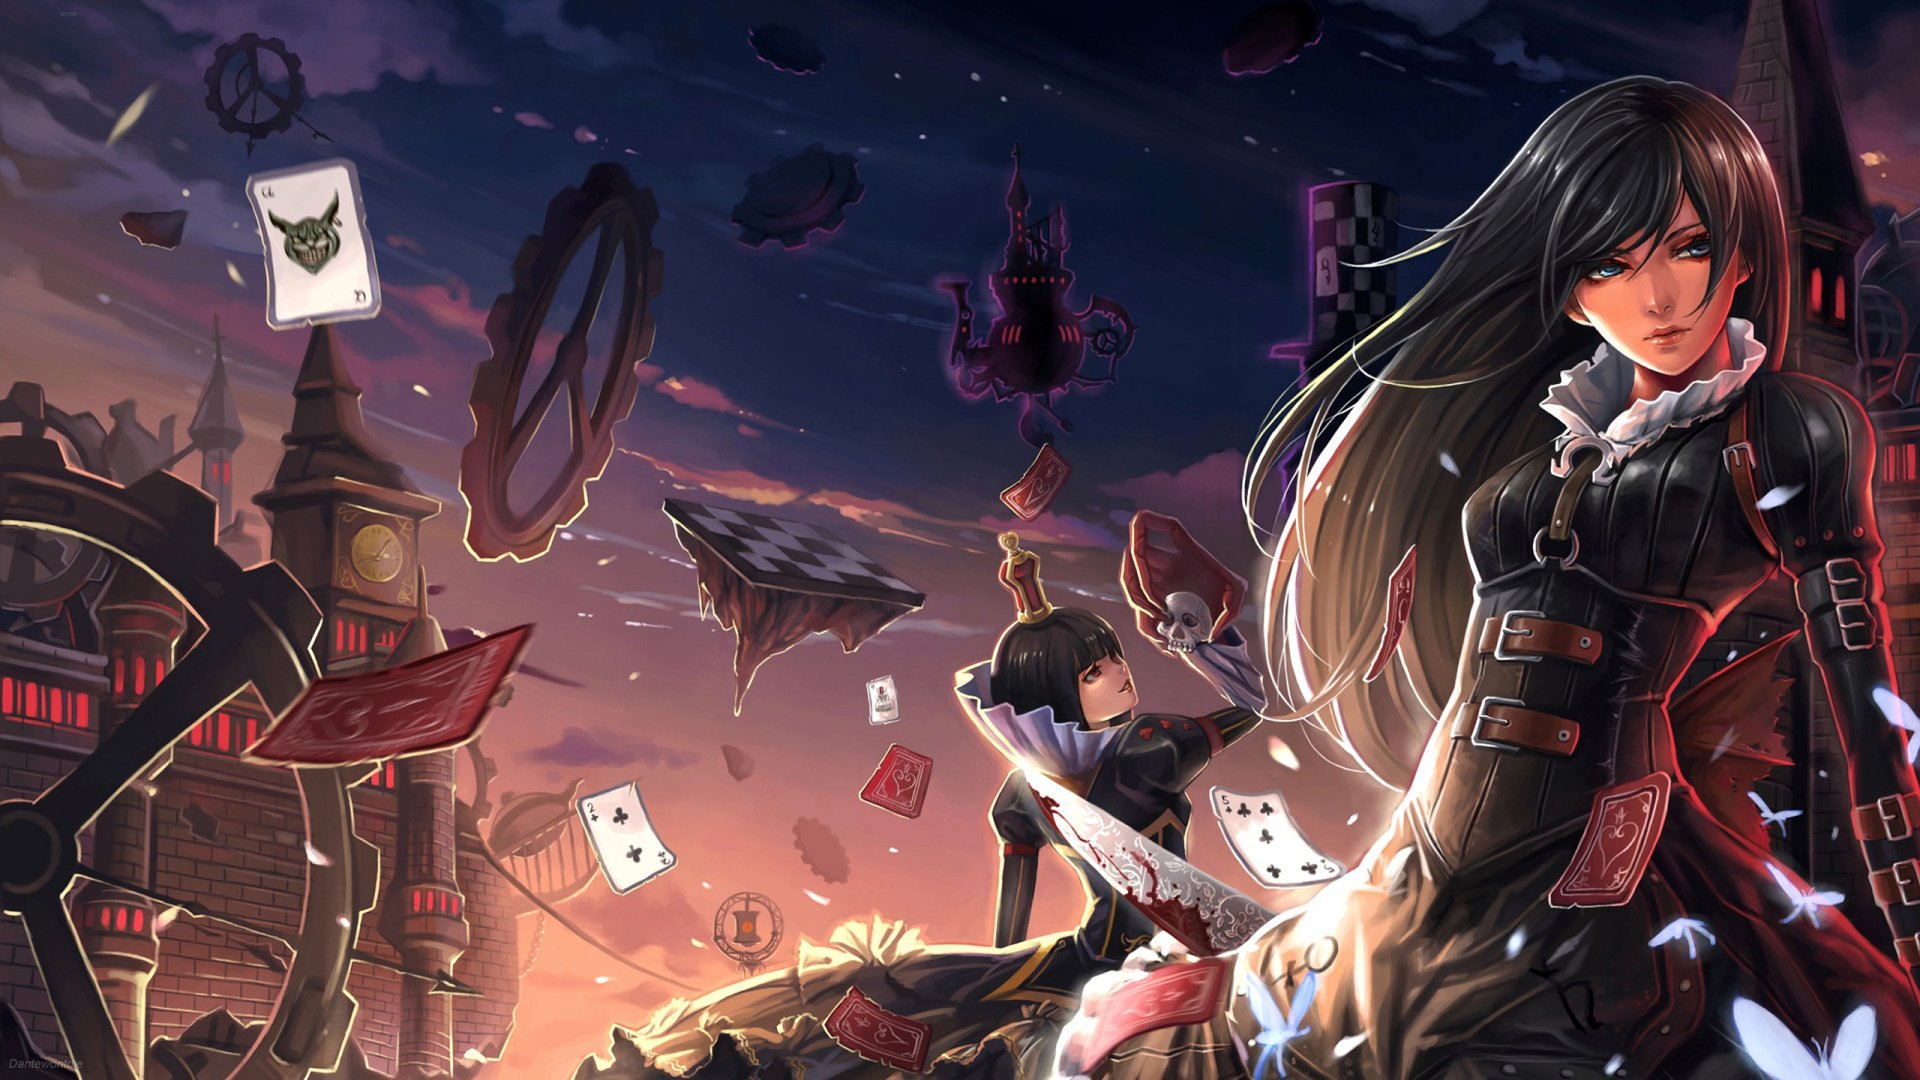 Preview: Alice: Madness Returns - Gematsu